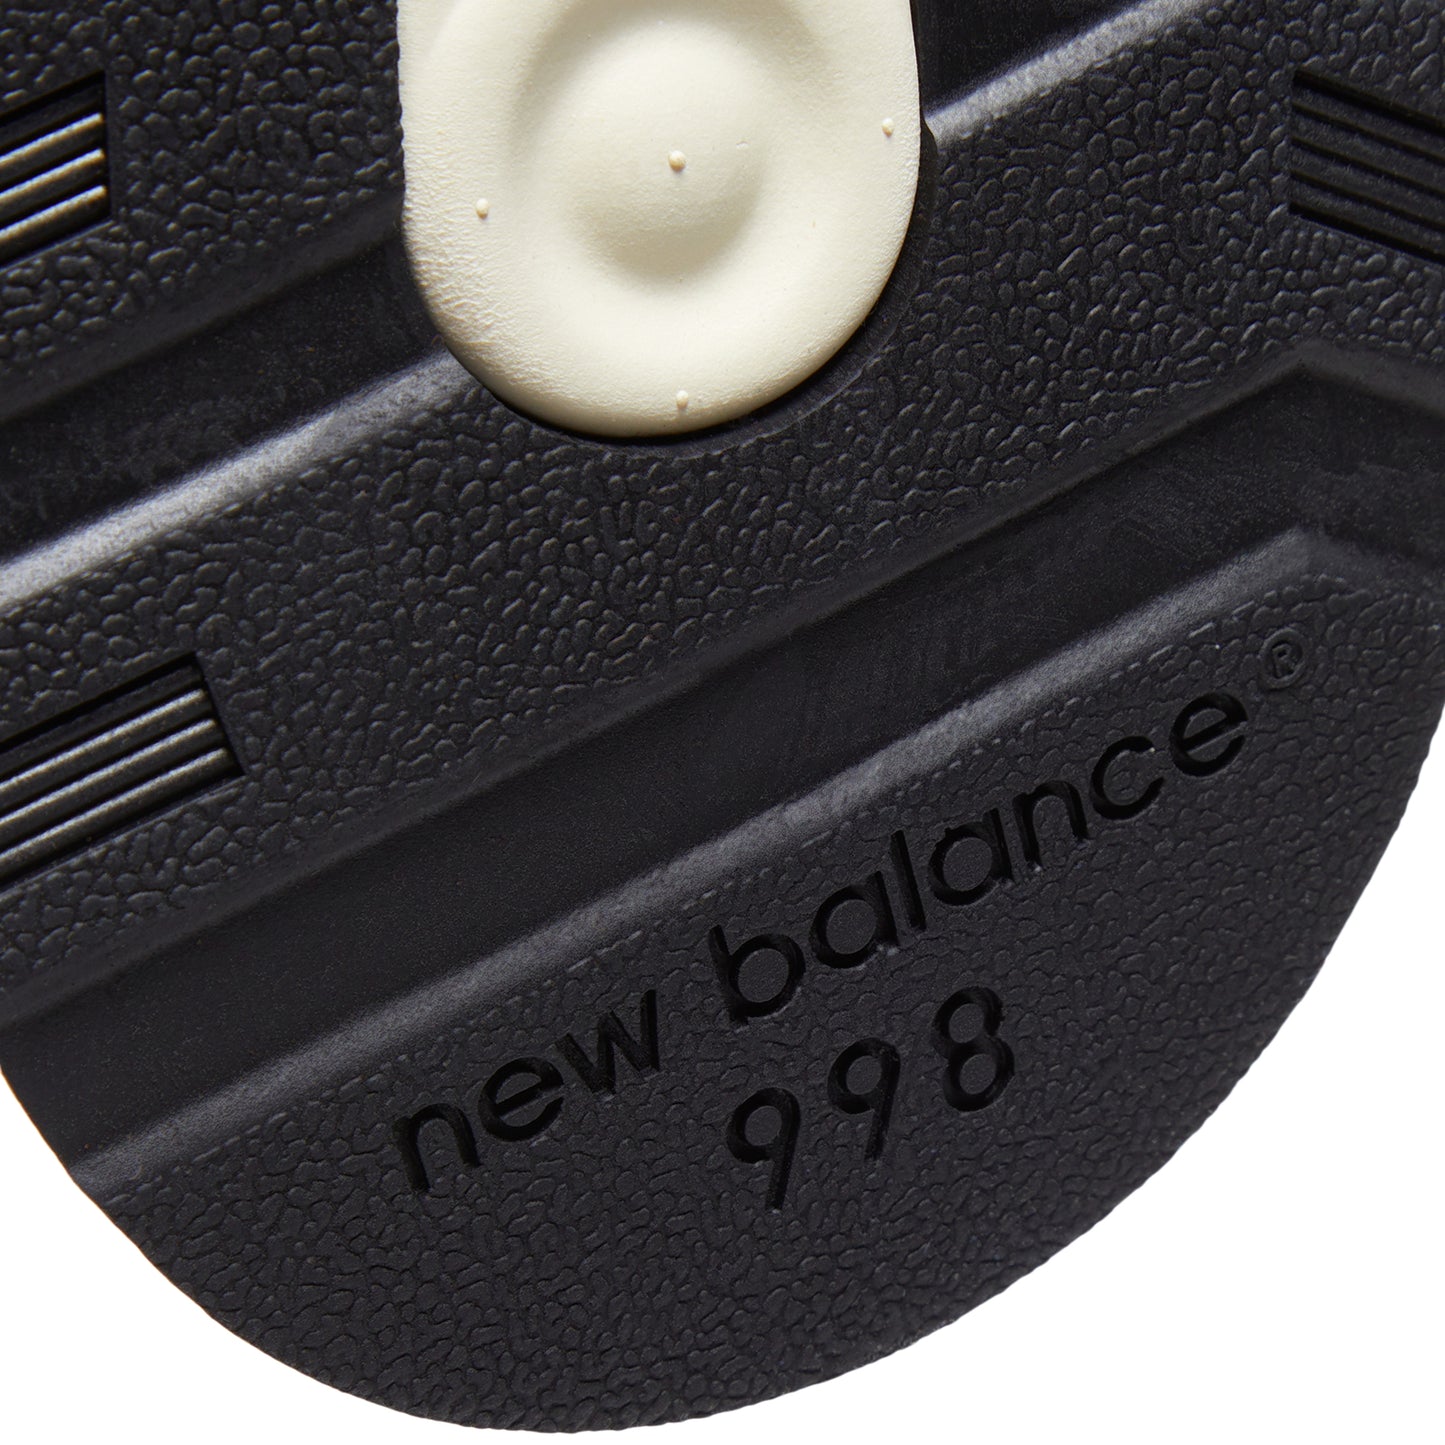 New Balance 998 (Grey)